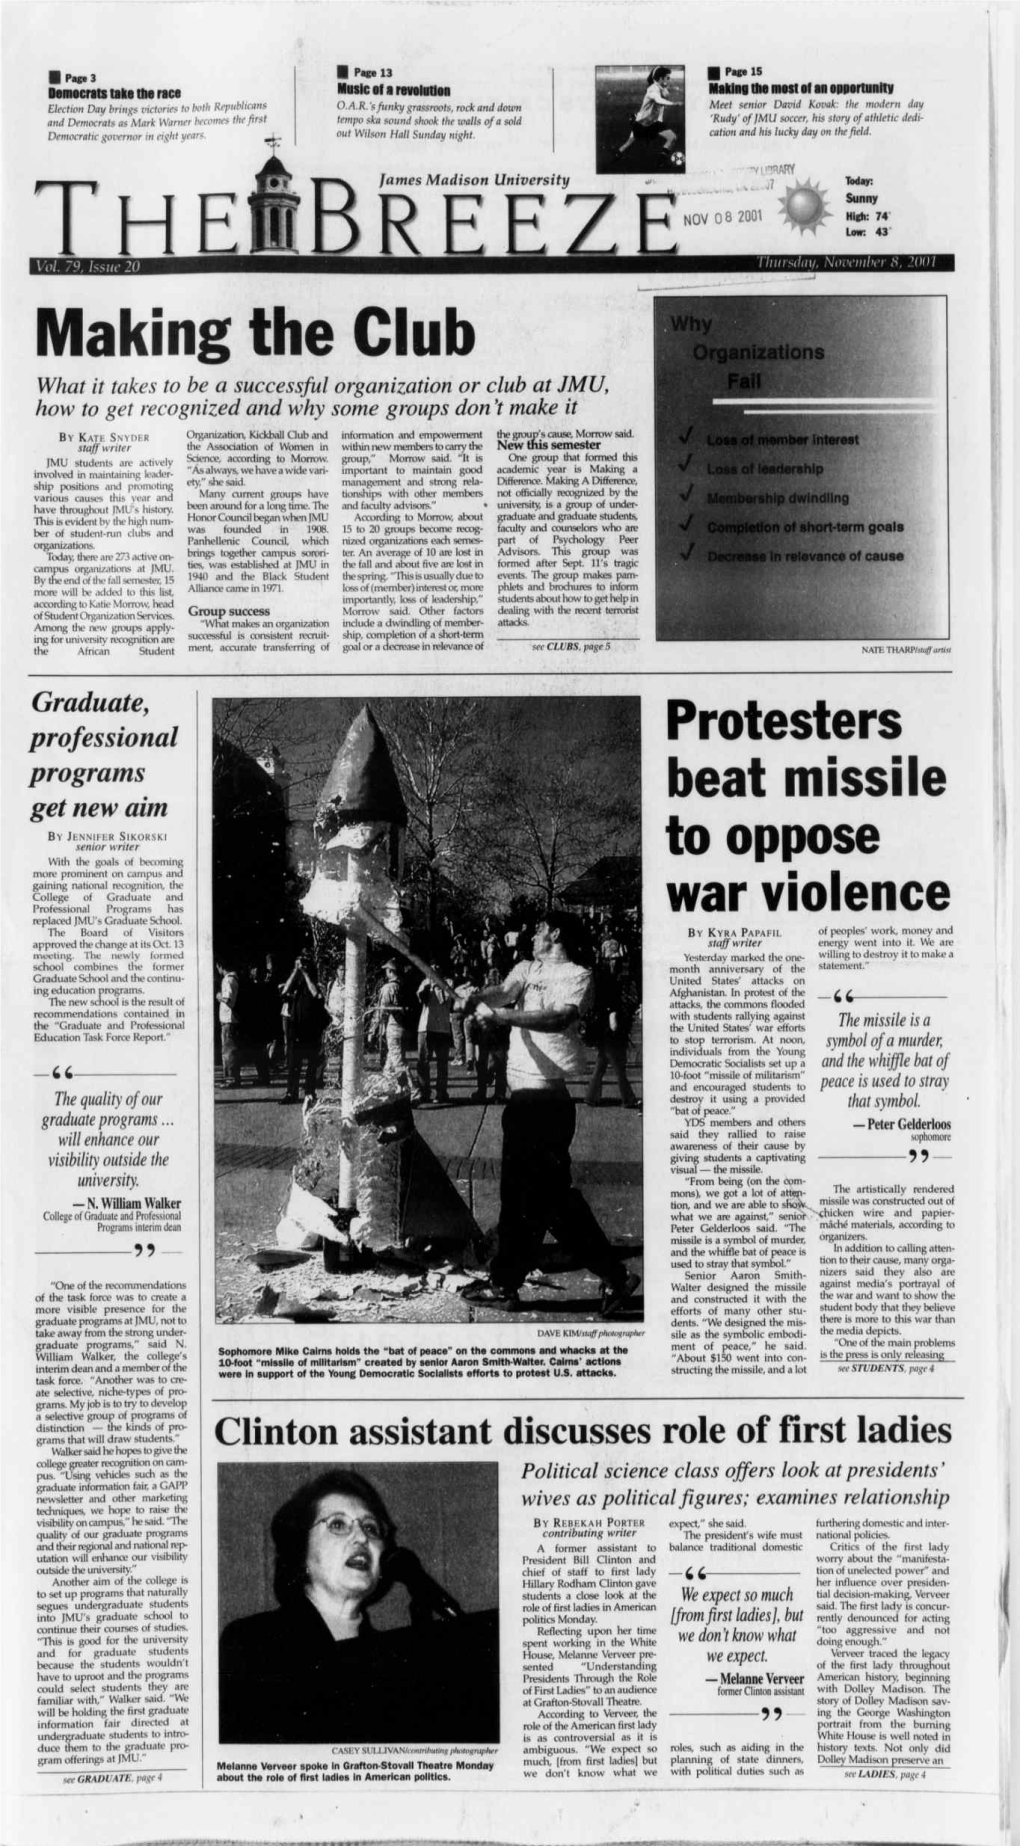 November 8, 2001 DUKE DAYS EVENTS CALENDAR TABLE of CONTENTS NEWS THURSDAY, NOV